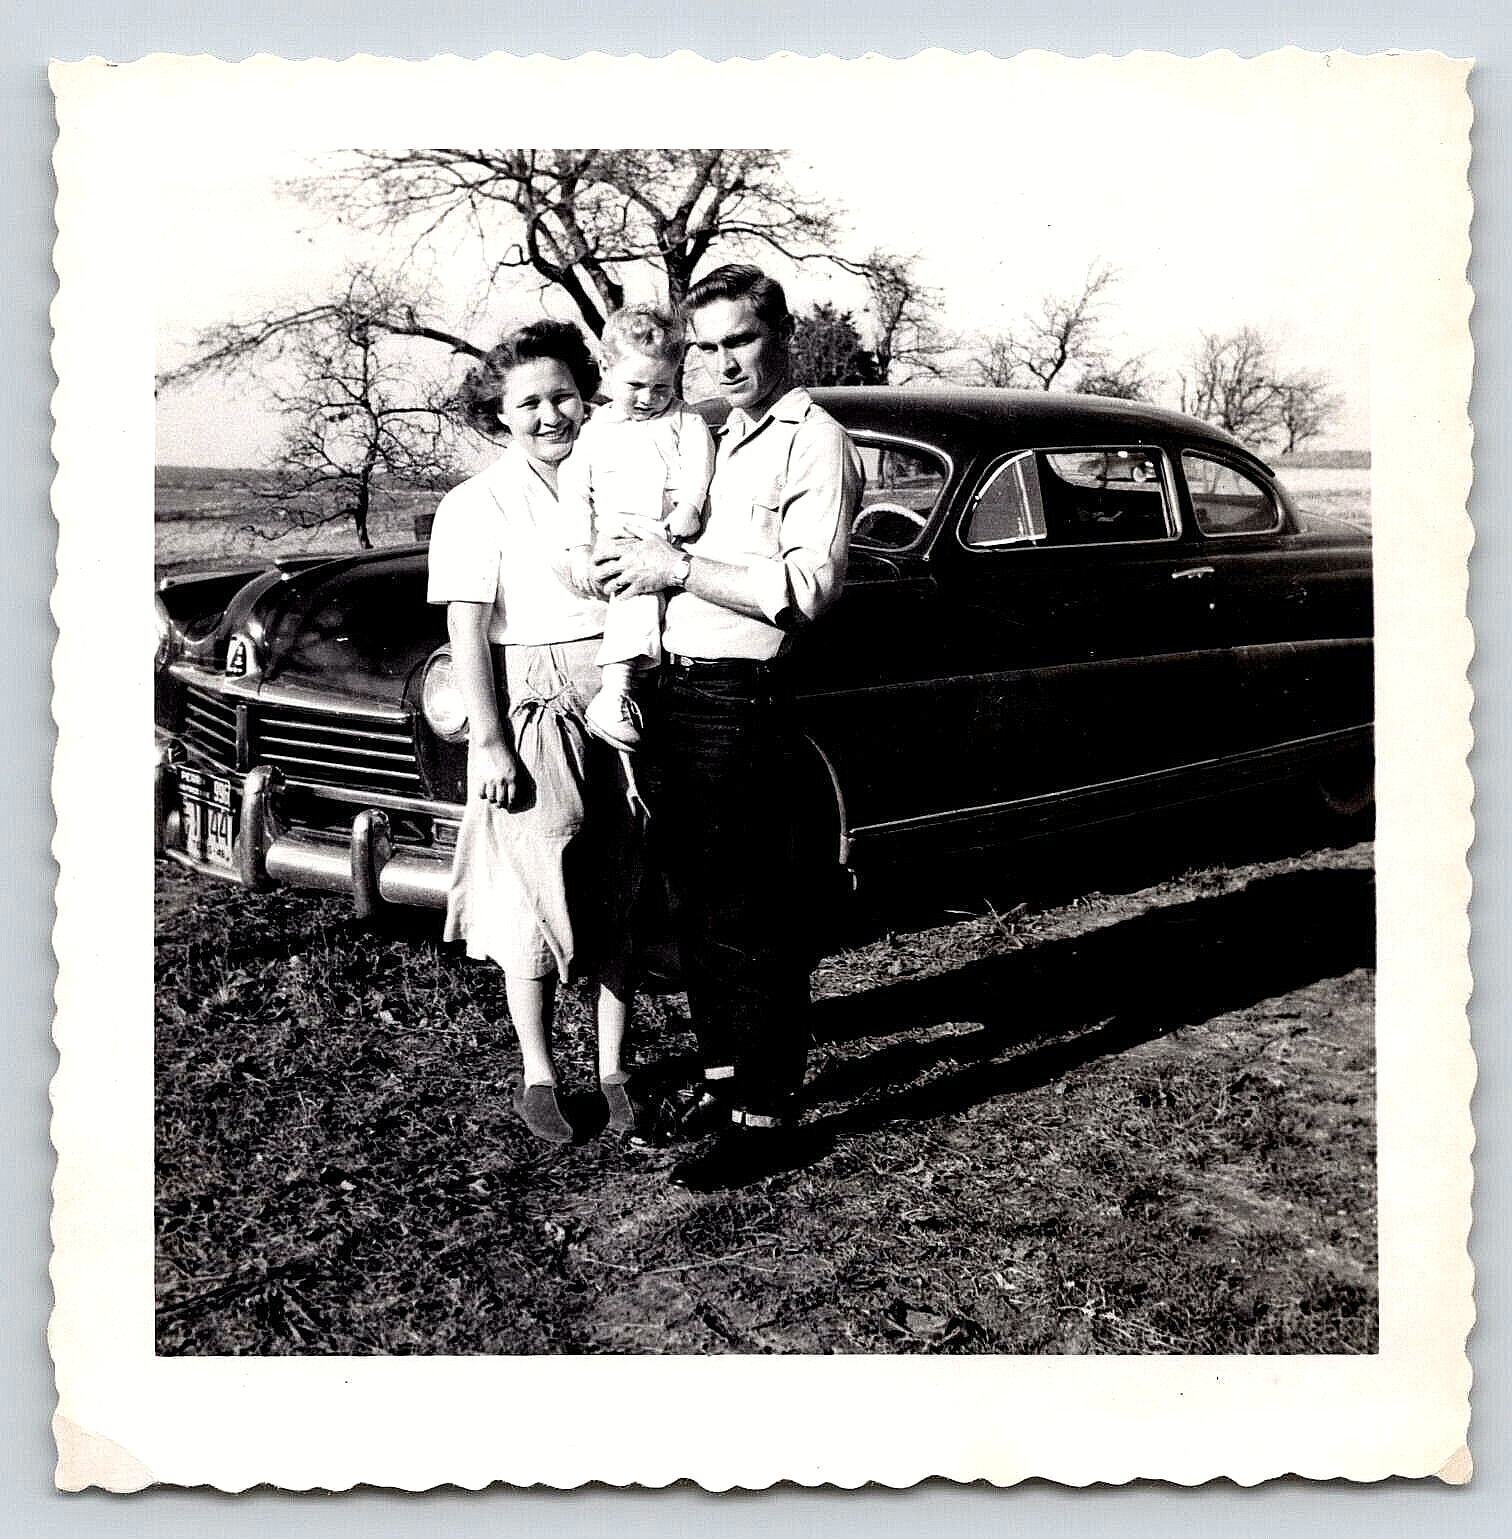 Photograph Vintage Hudson Automobile Family Man Woman Boy Outdoors Texas 1948